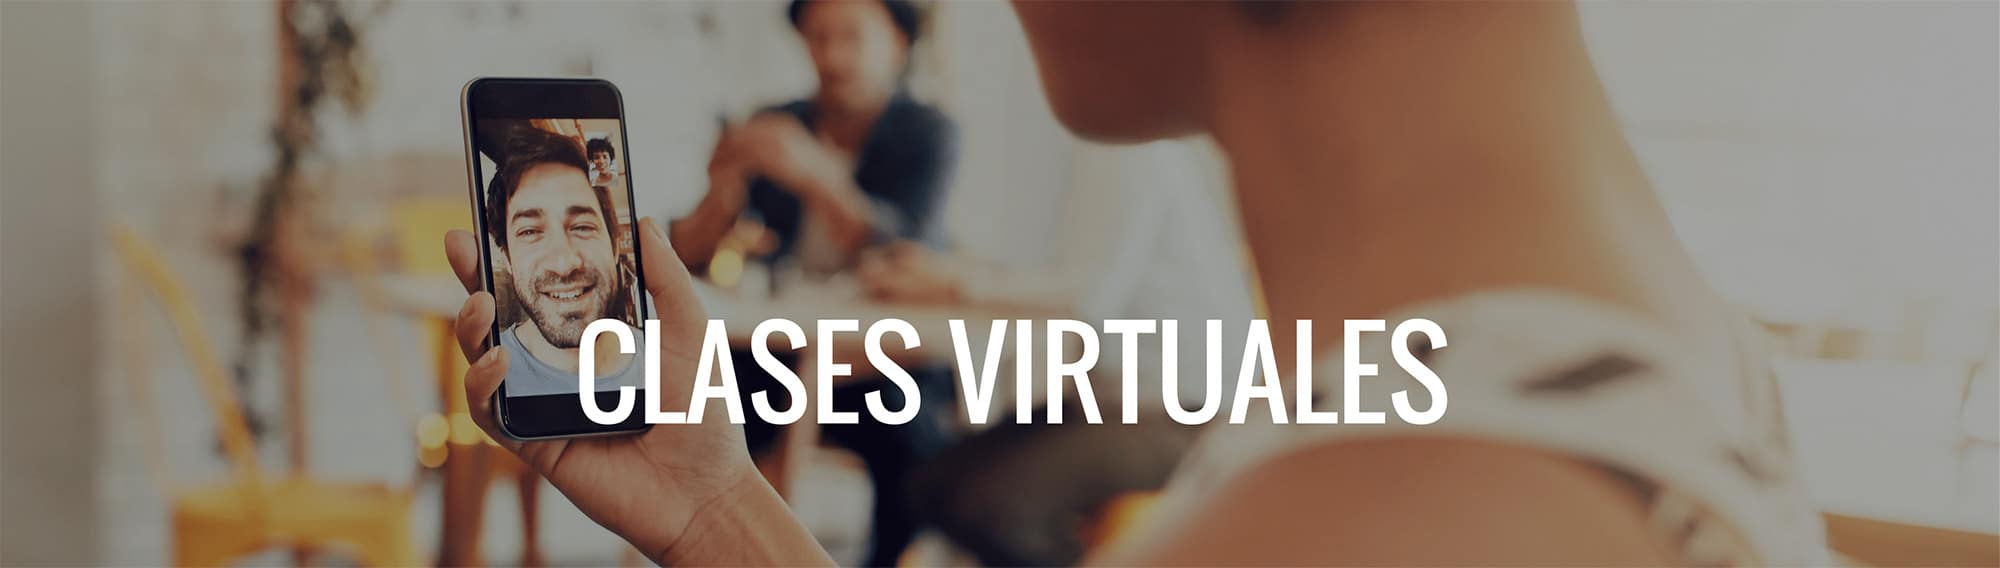 ingles para empresas clases virtuales